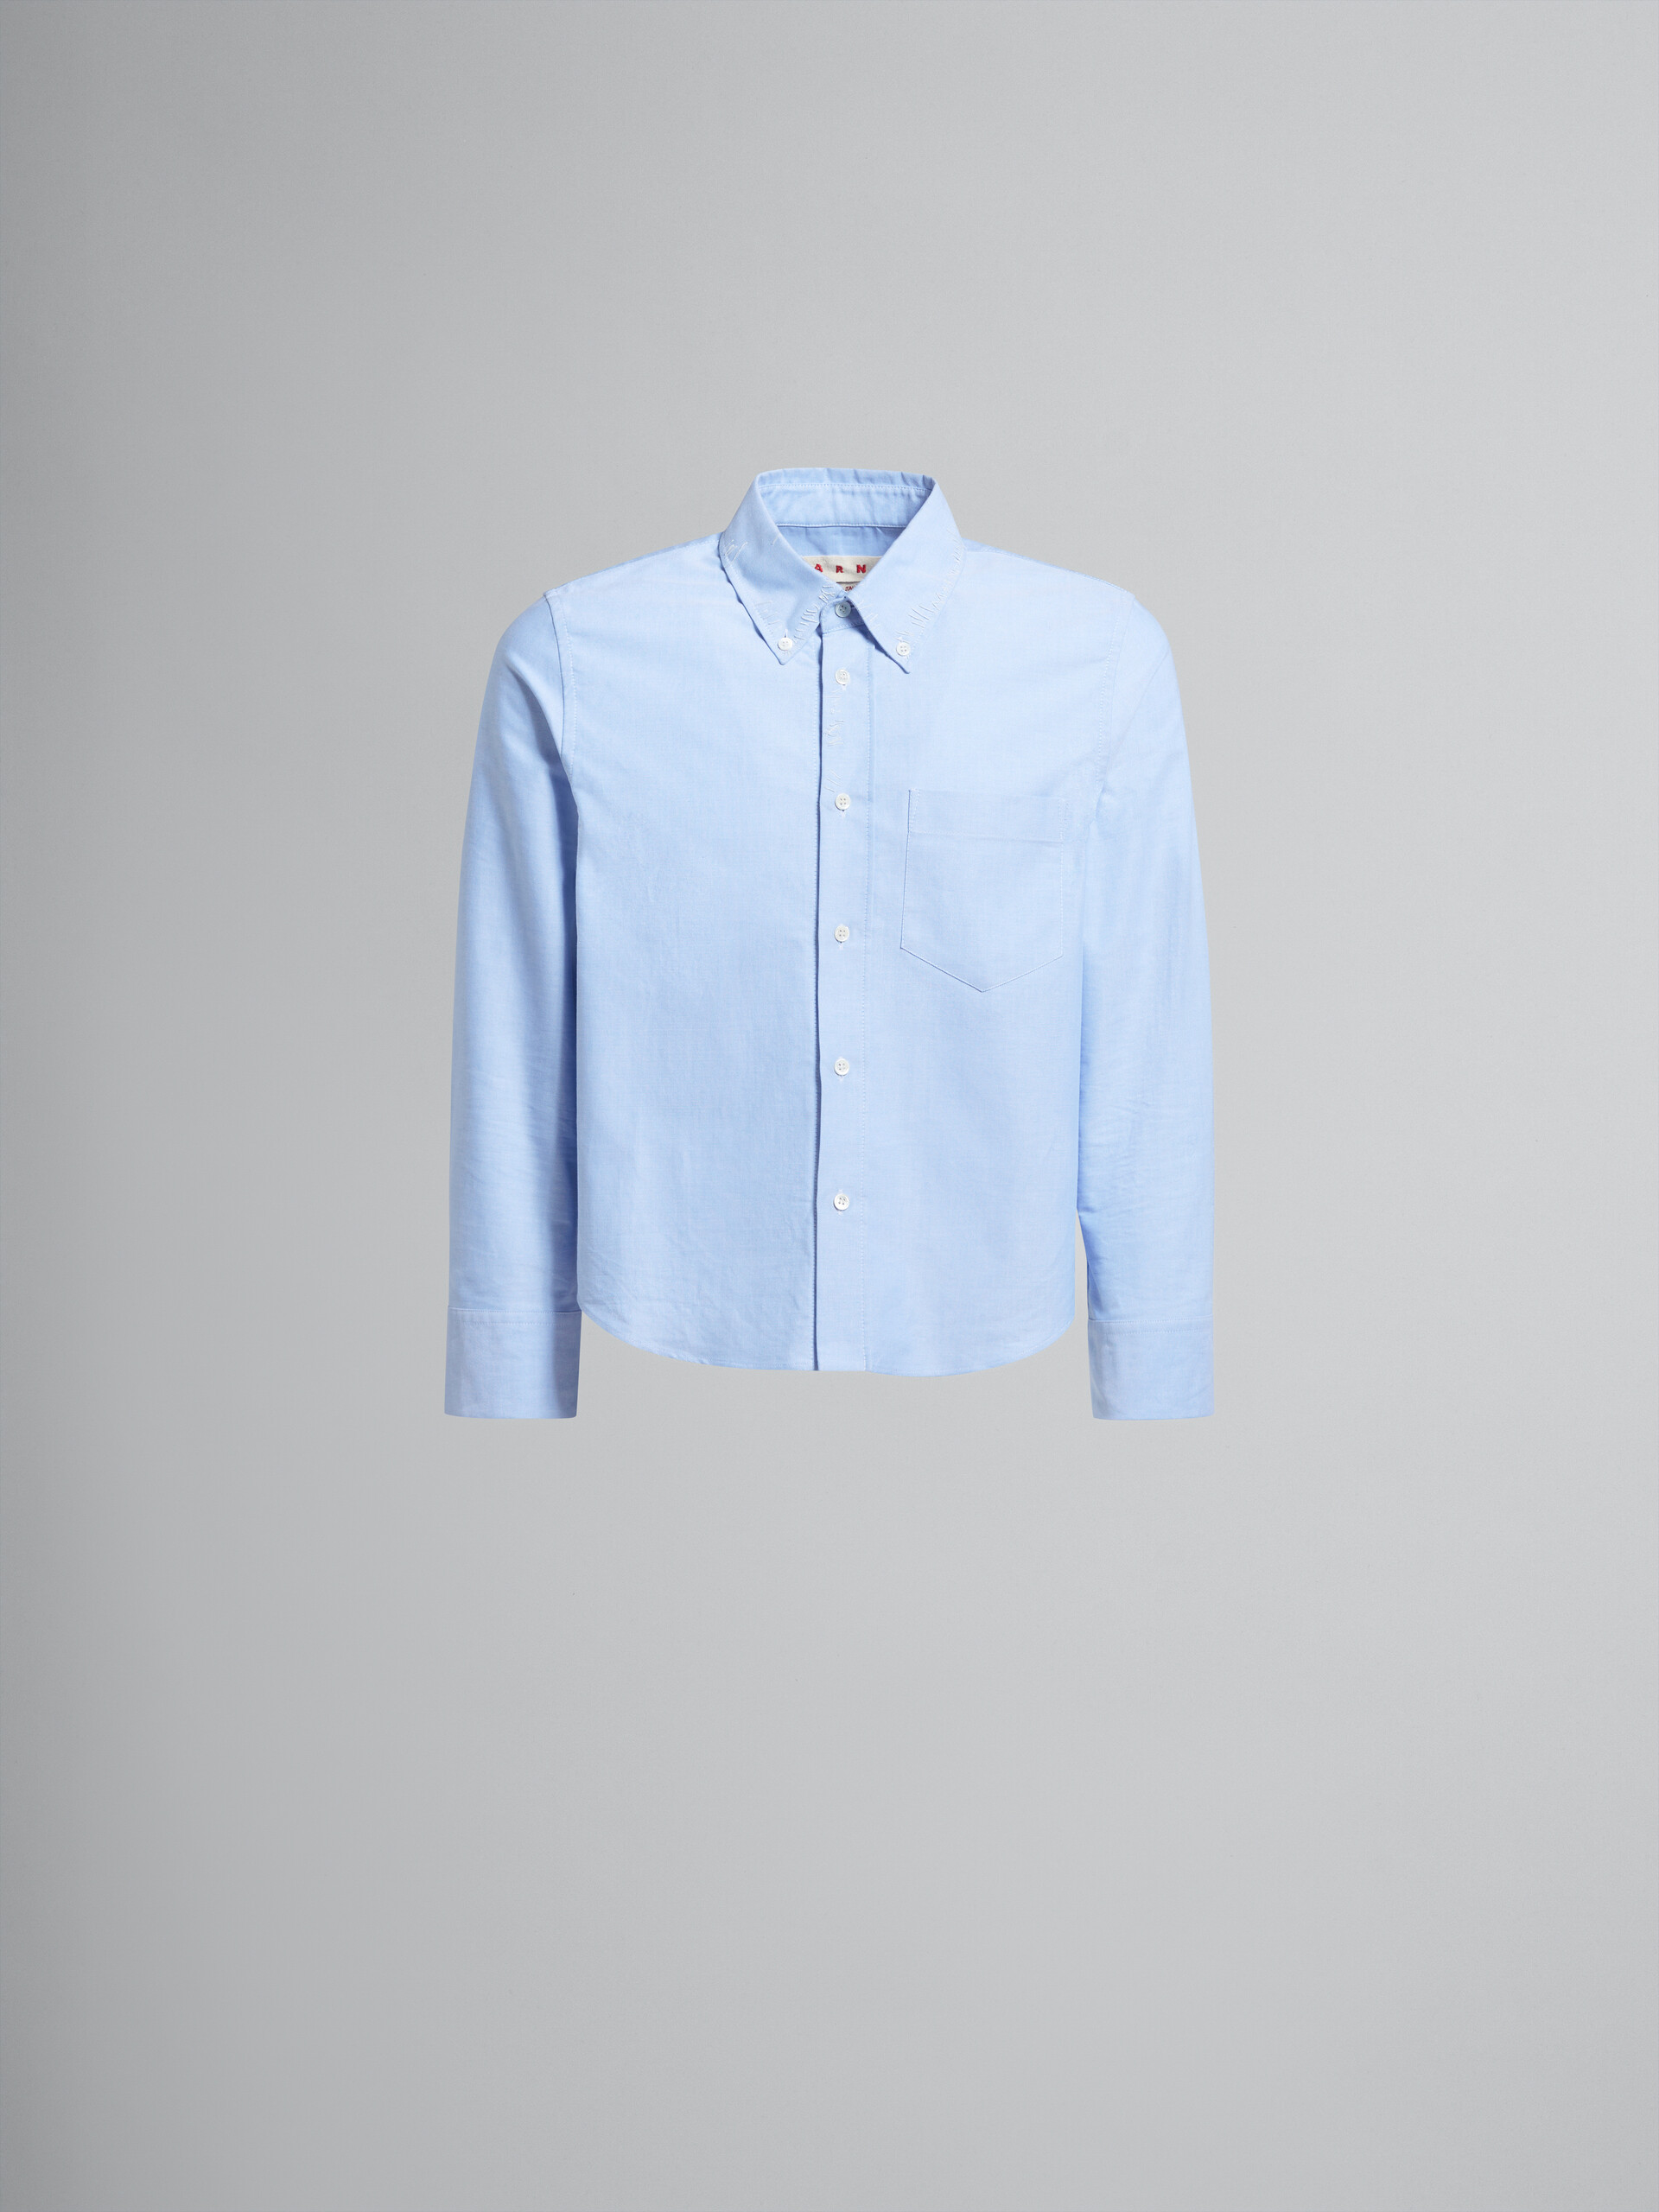 Chemise Oxford courte bleu clair avec effet raccommodé Marni - Chemises - Image 1